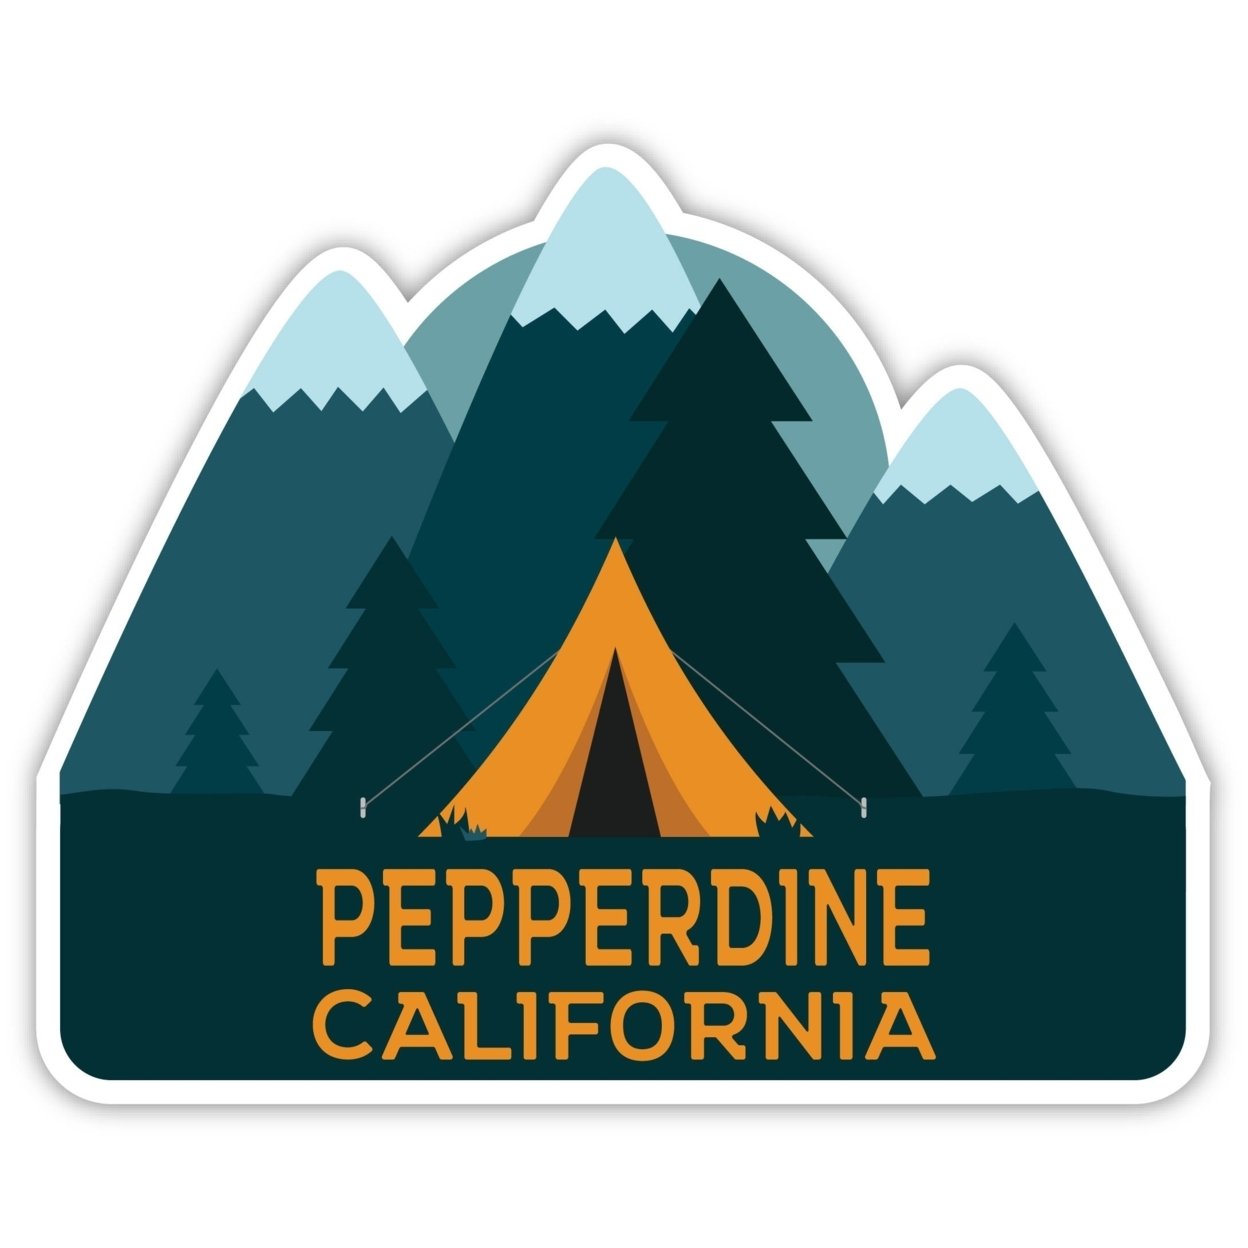 Pepperdine California Souvenir Decorative Stickers (Choose Theme And Size) - Single Unit, 4-Inch, Bear